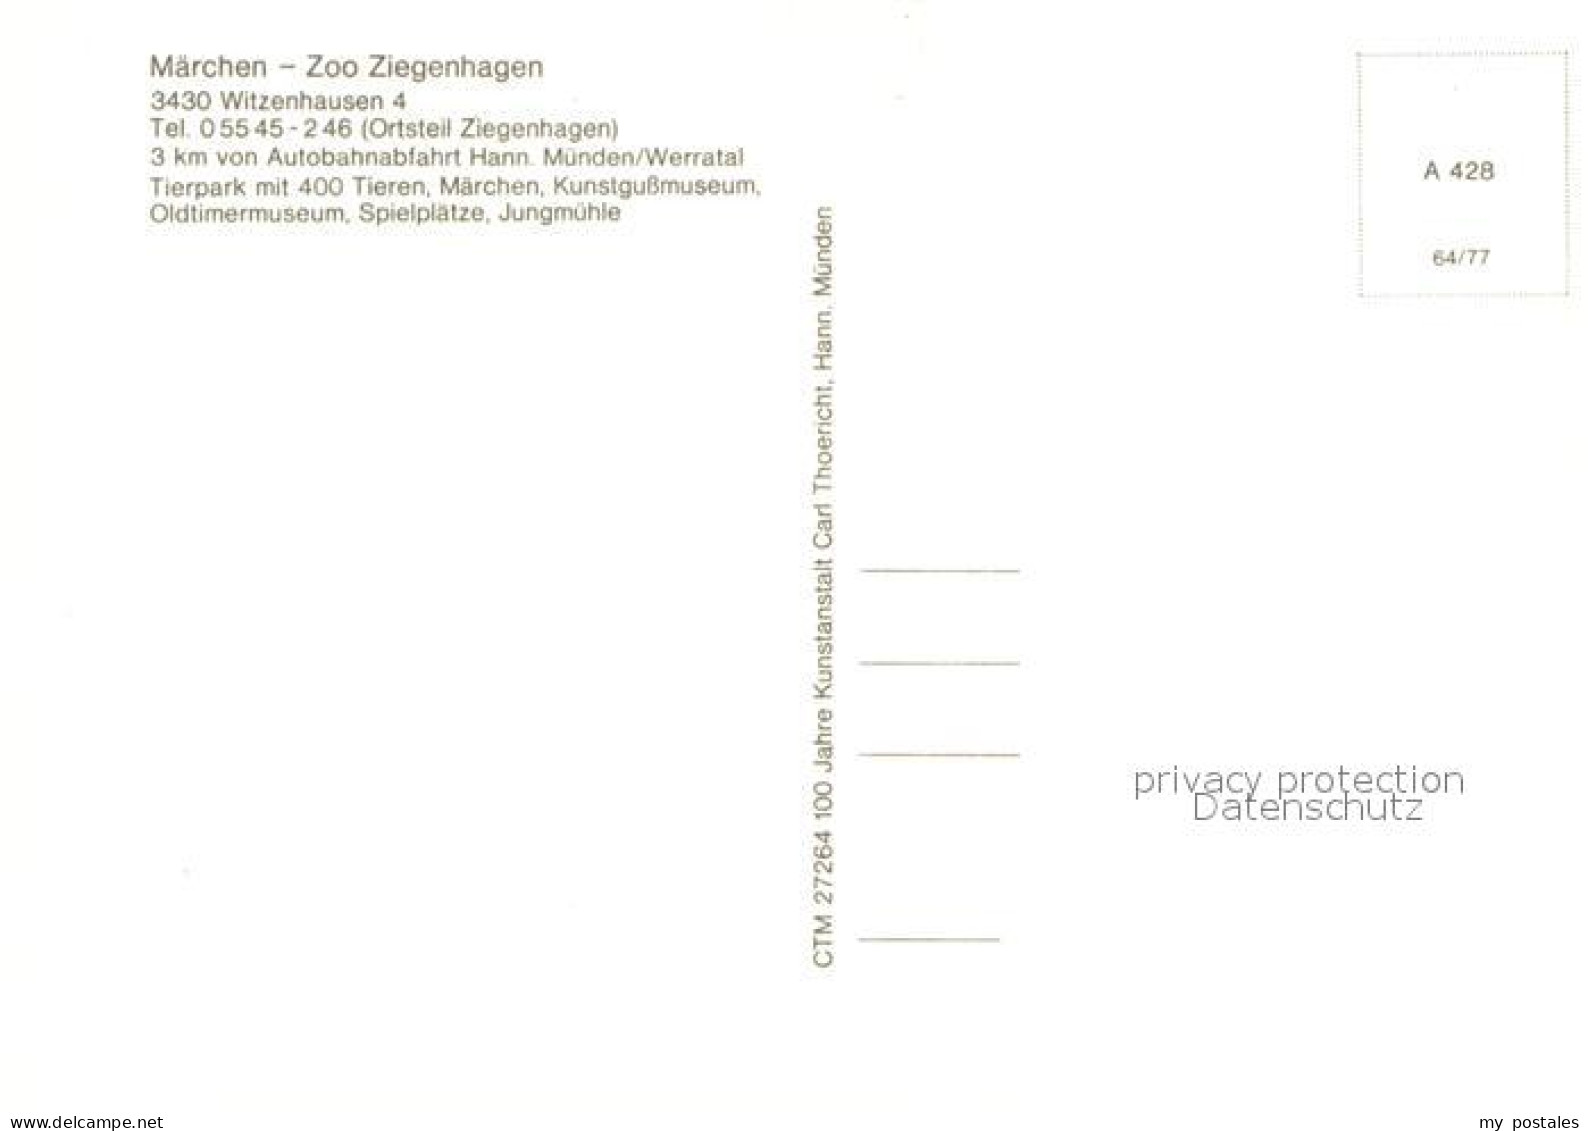 72990436 Ziegenhagen Witzenhausen Maerchenzoo Ziegenhagen Witzenhausen - Witzenhausen